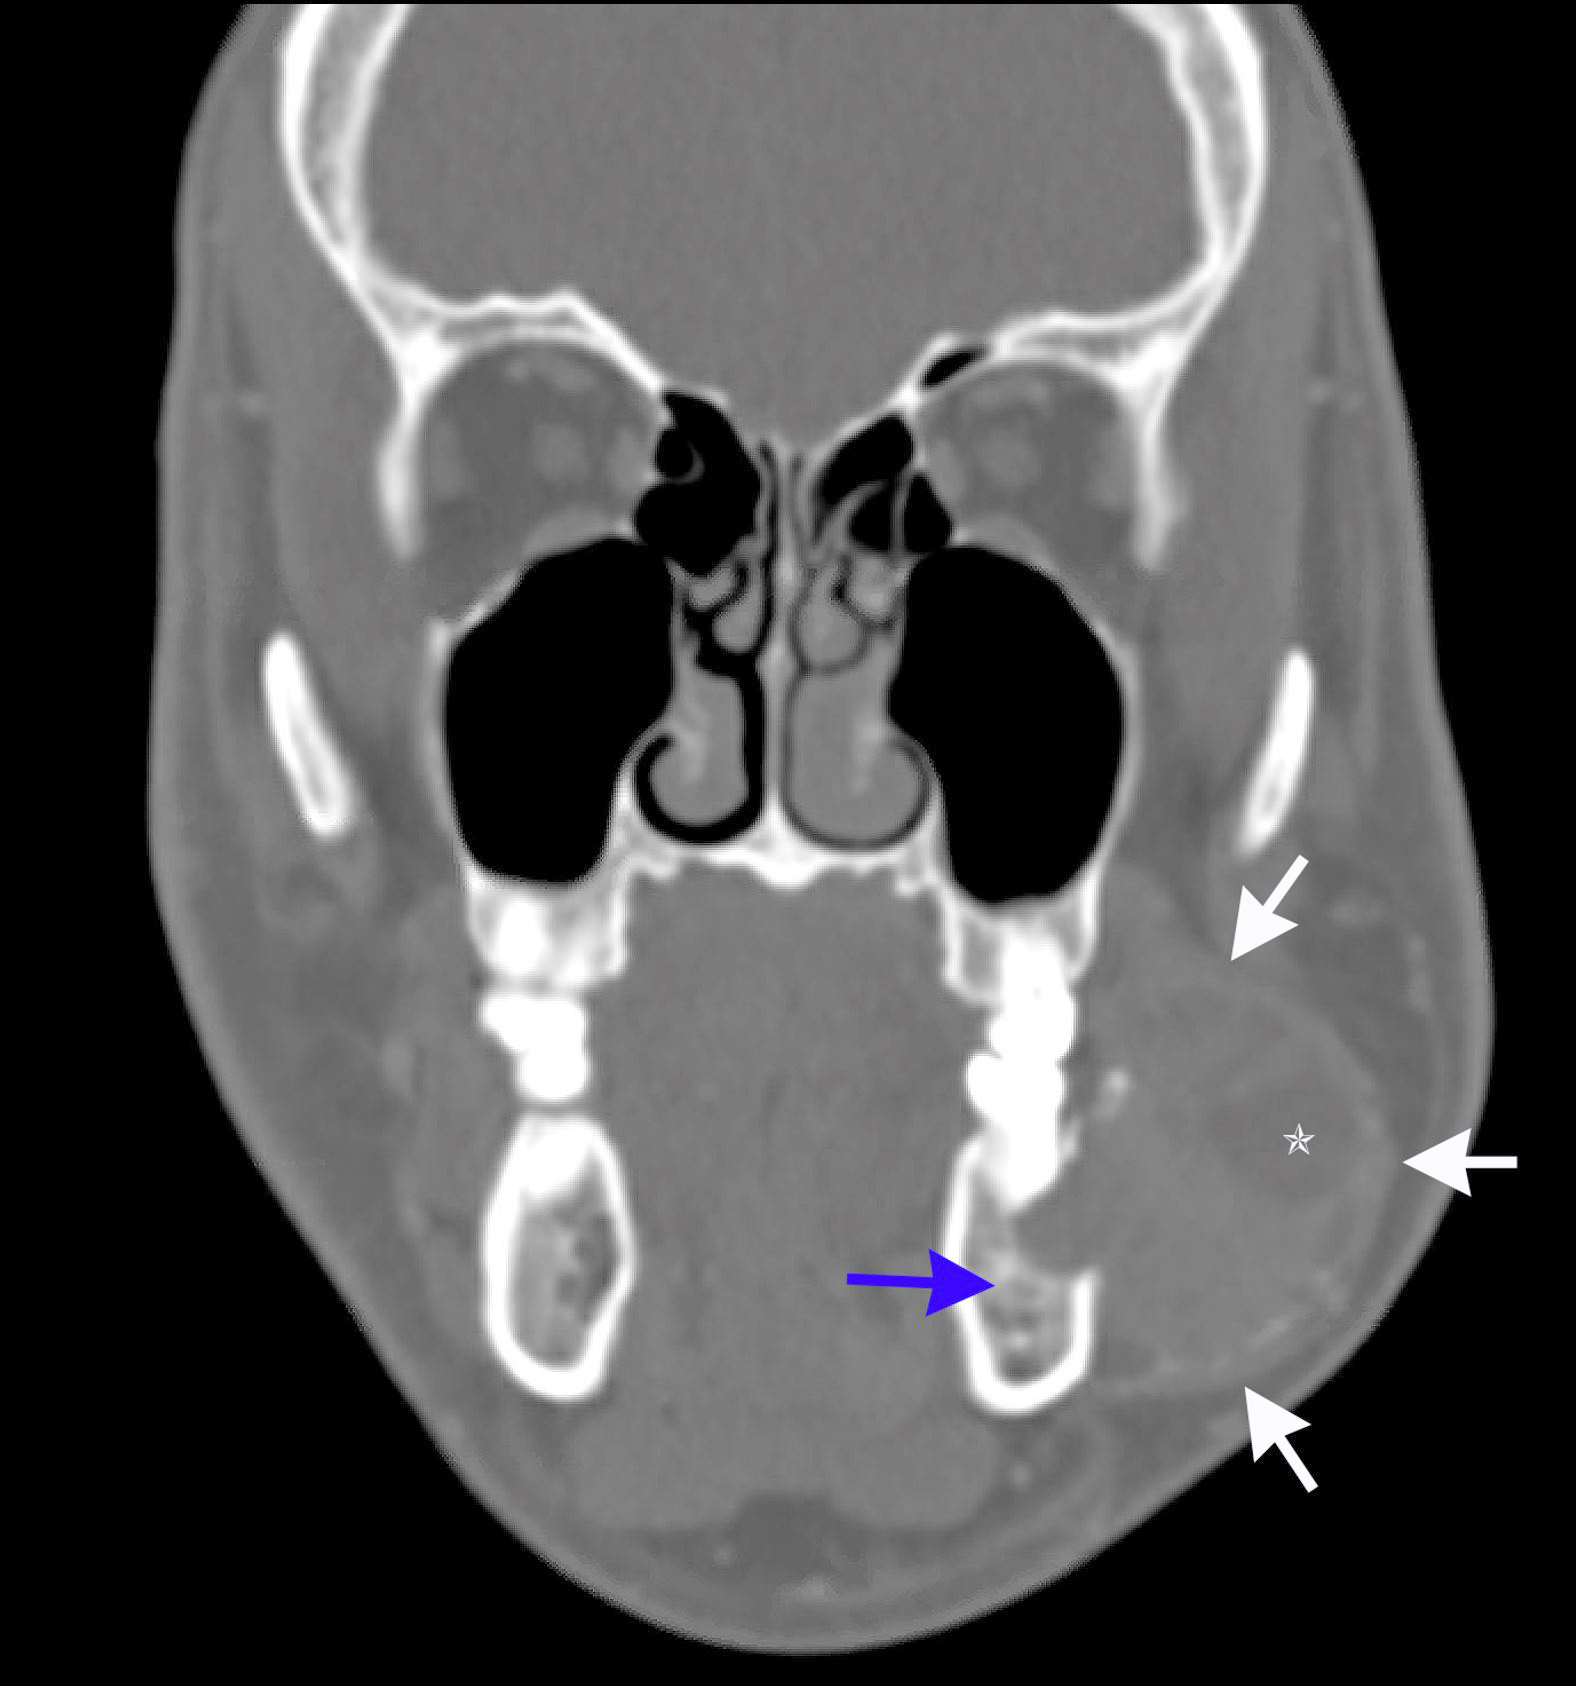 Case 3: coronal CT view